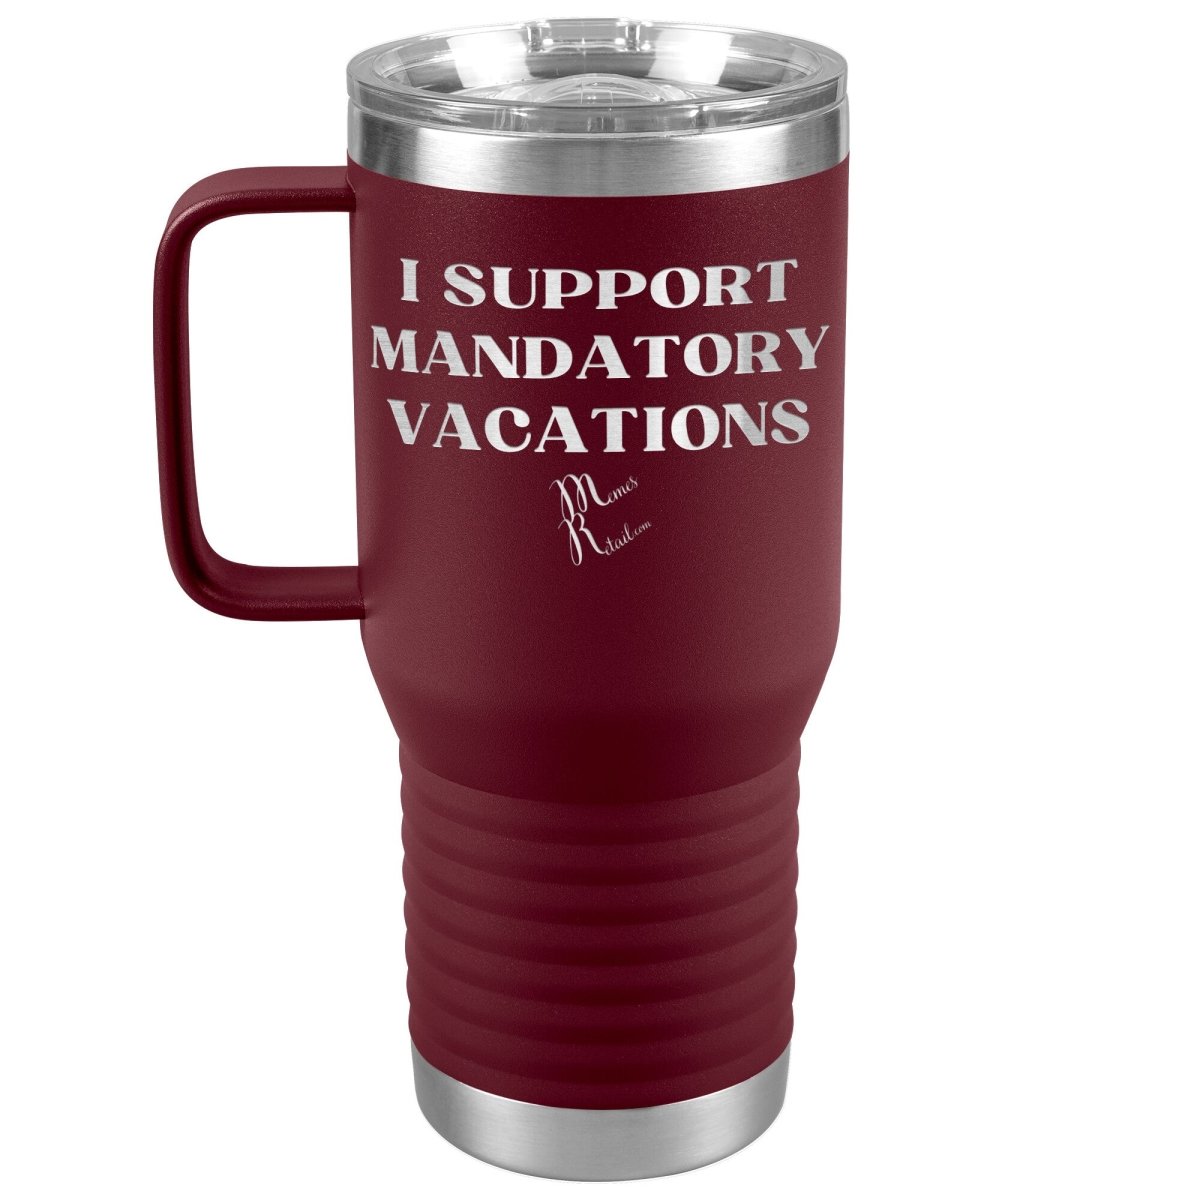 I support mandatory vacations Tumblers, 20oz Travel Tumbler / Maroon - MemesRetail.com